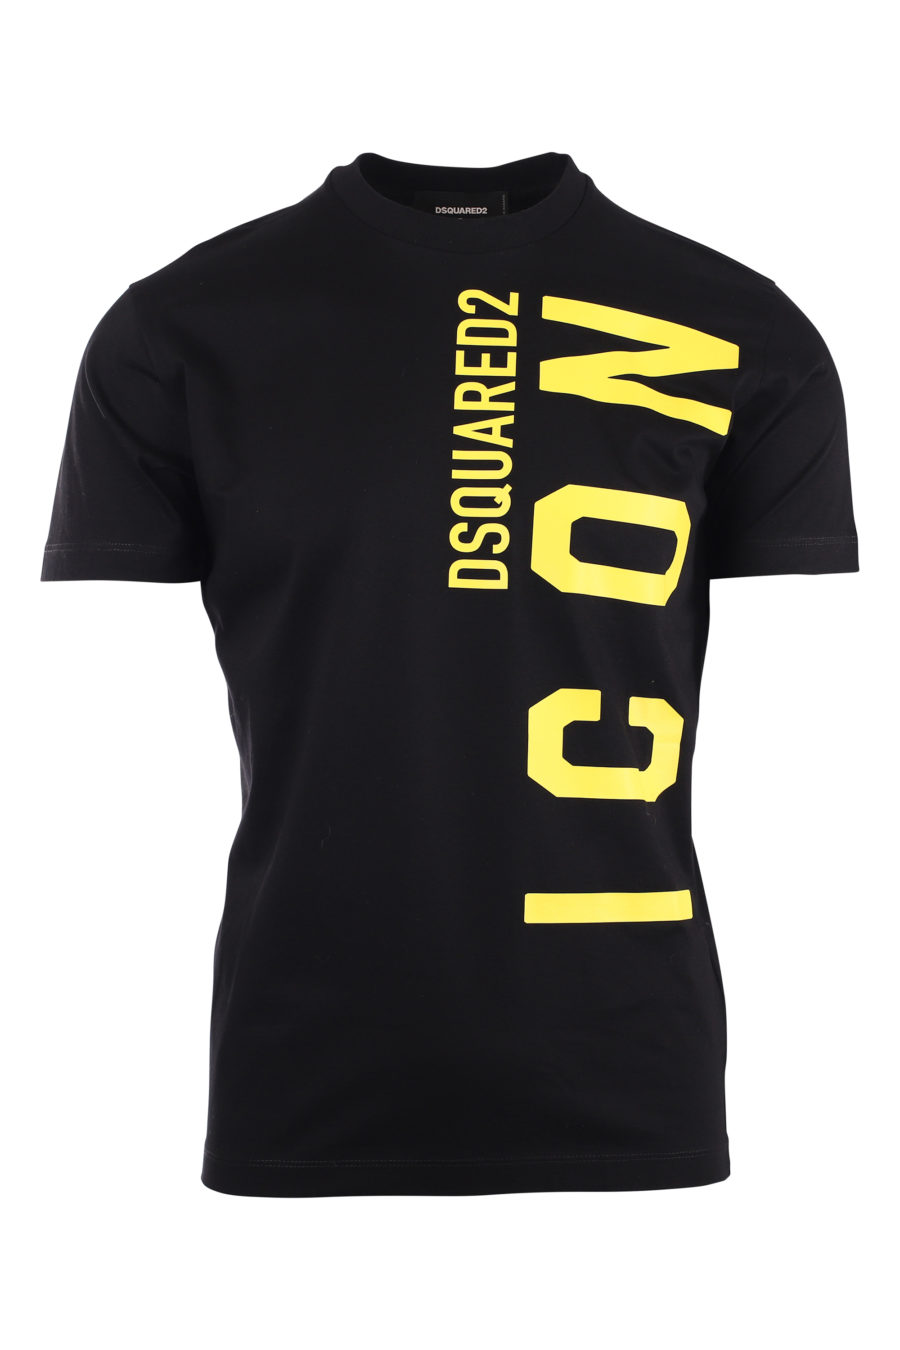 Camiseta negra con logo amarillo "icon" vertical - IMG 9719